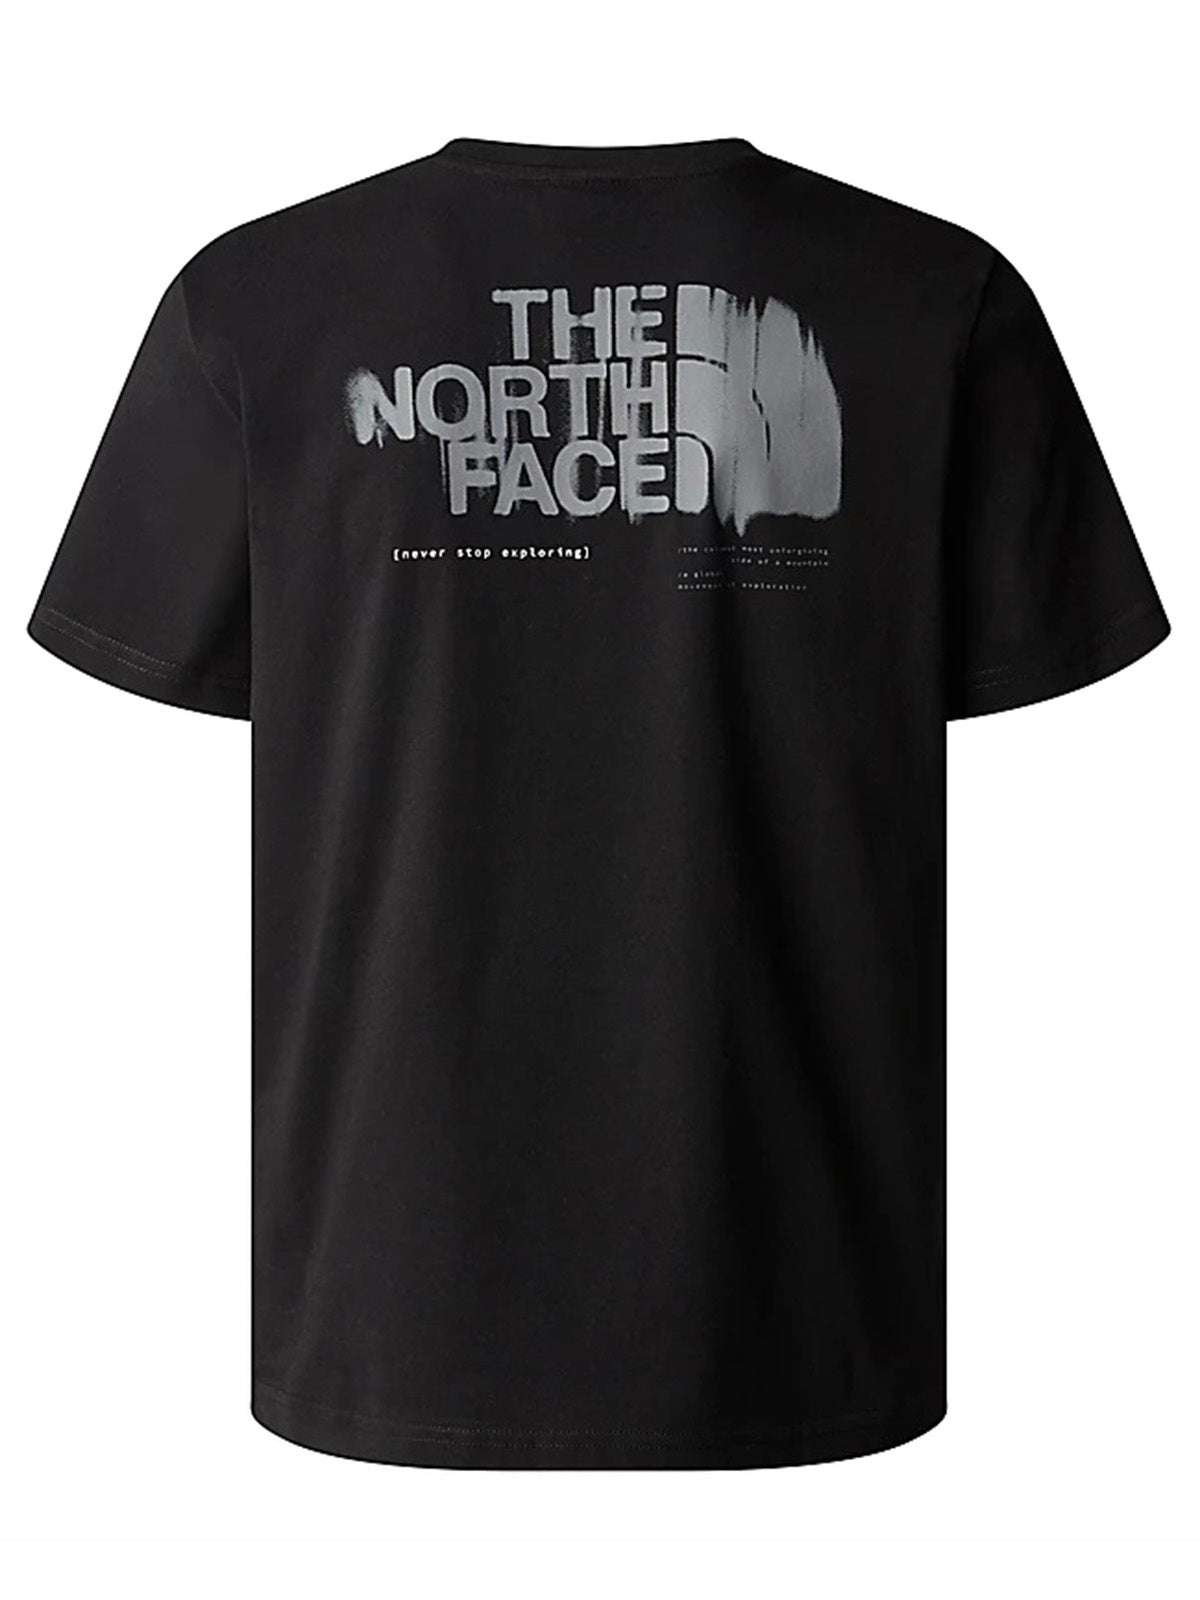 T-shirt Uomo The North Face - Graphic 3 T-Shirt - Nero